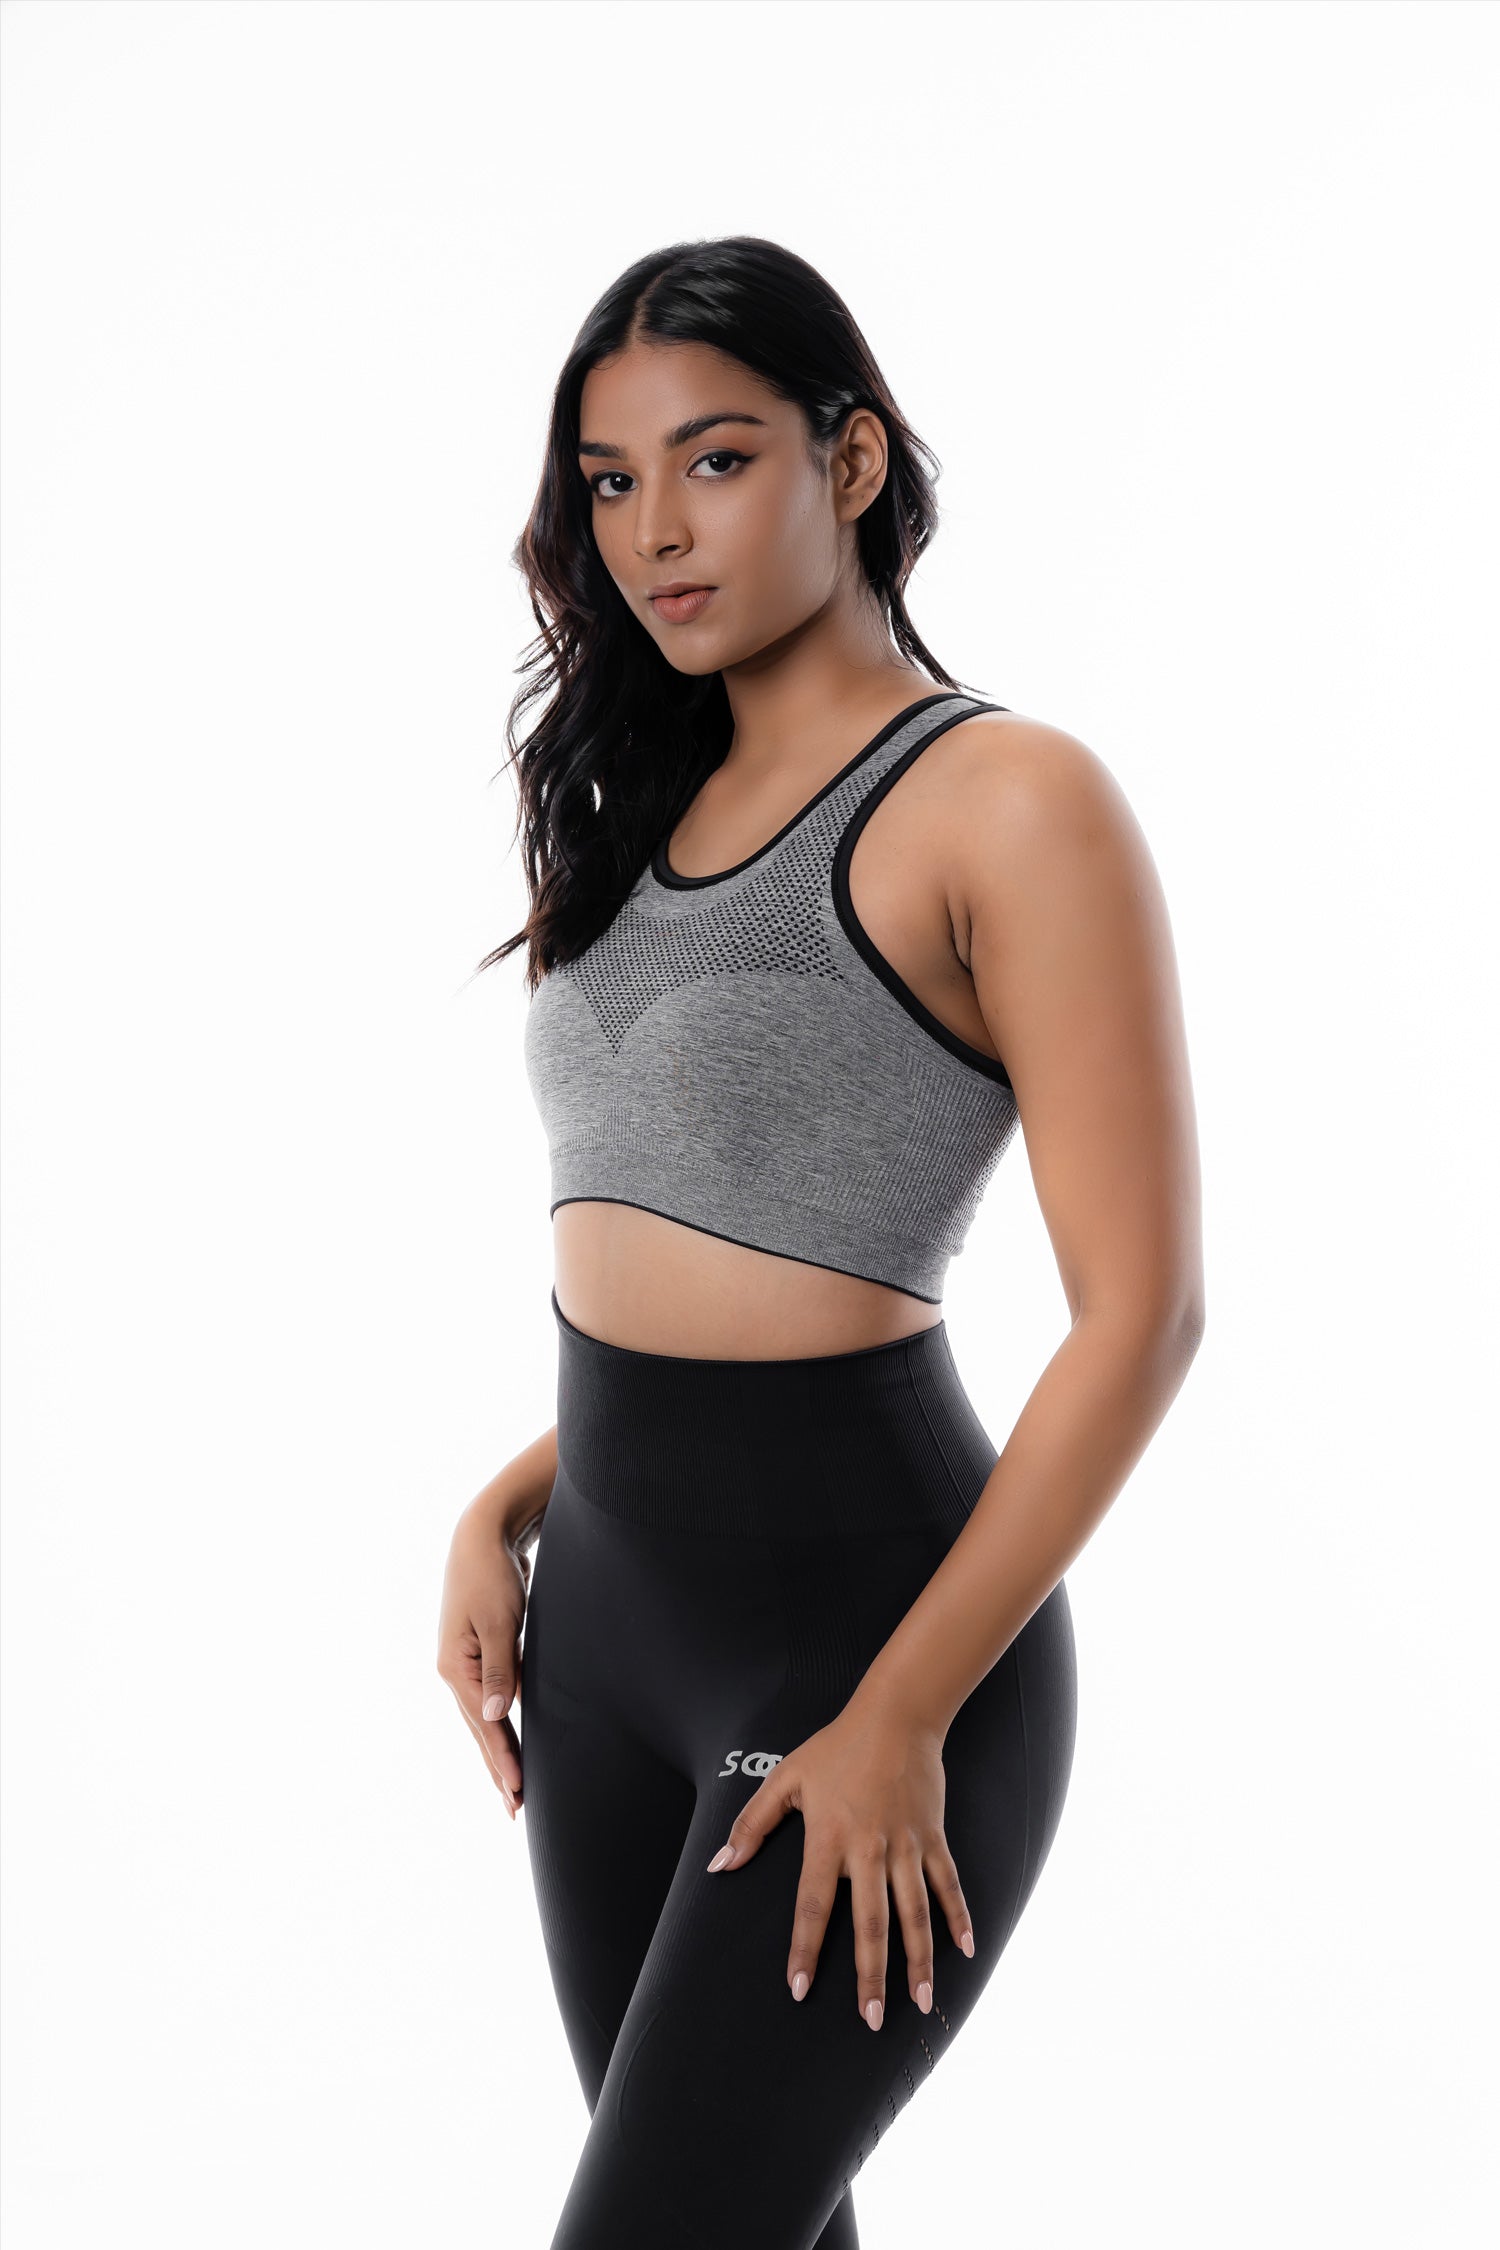 Seamless Black Sports Bra | Societies Clothing Sri Lanka | Activewear | Gym Clothes | Gym Wear